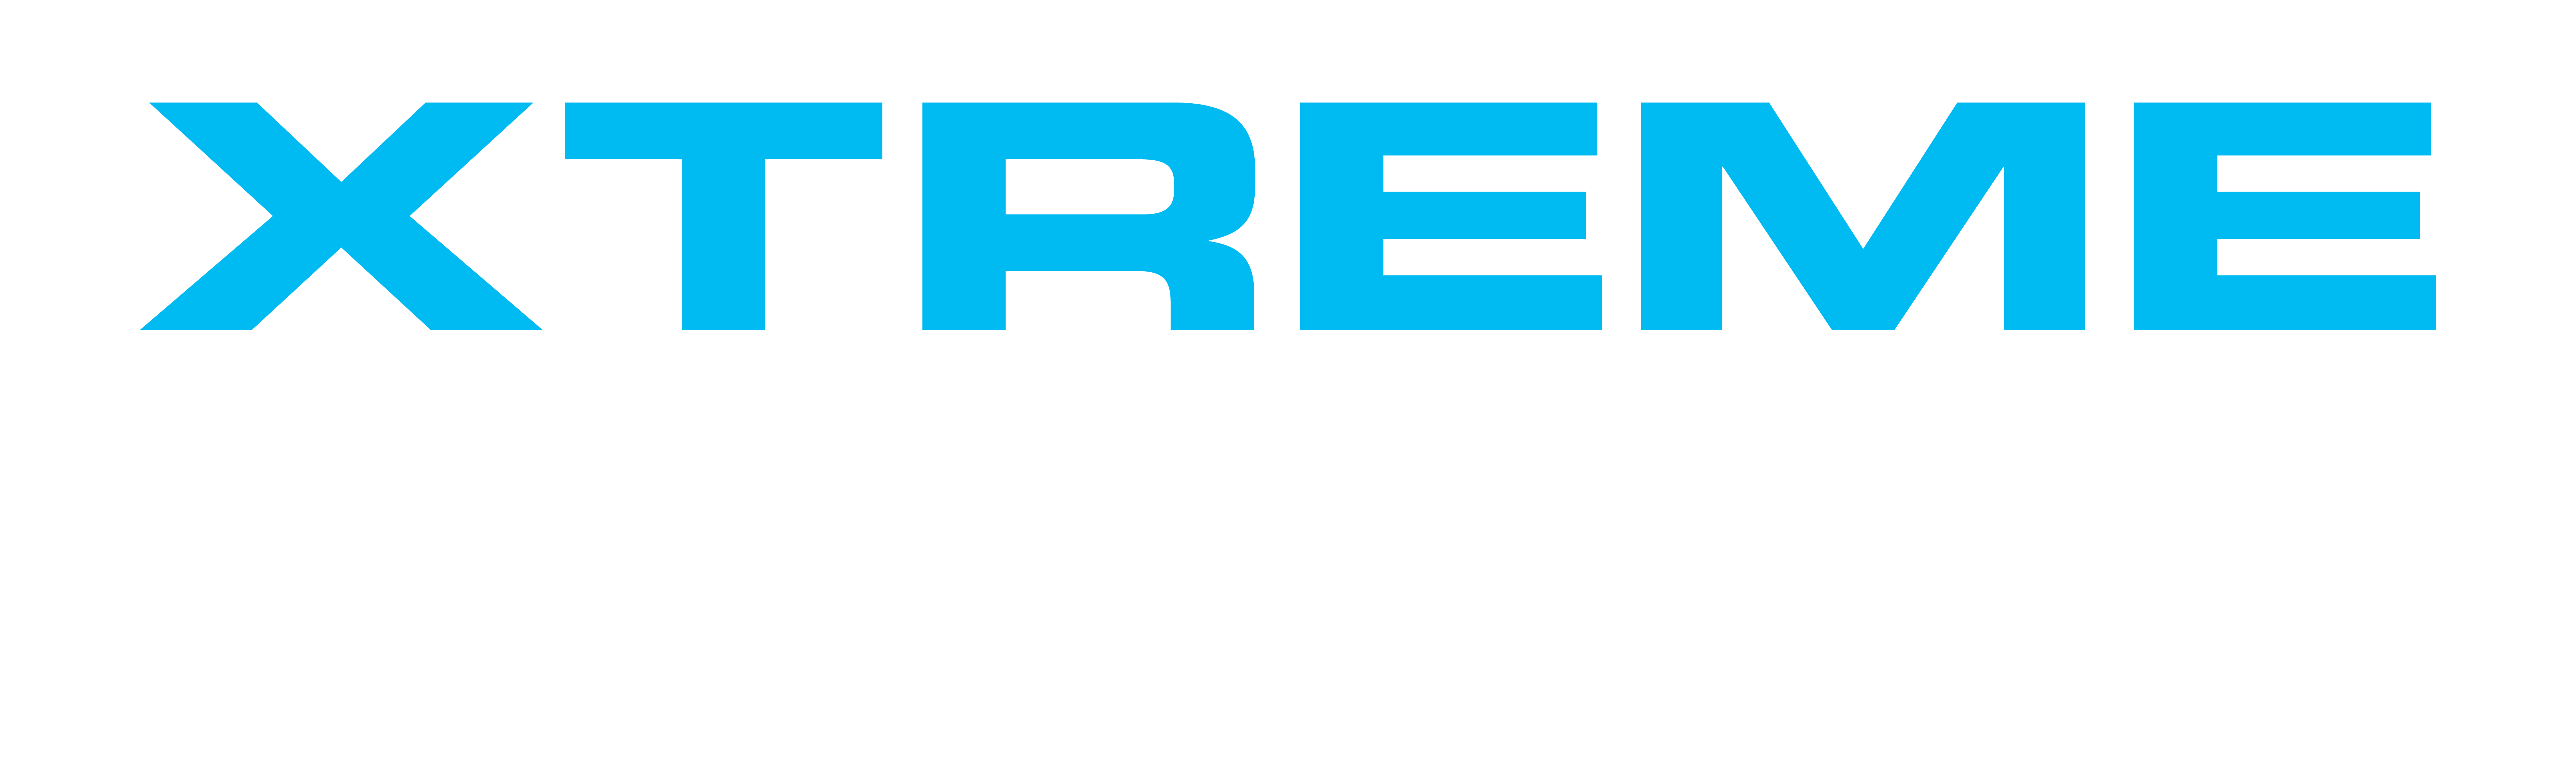 Xtreme Technology Logo